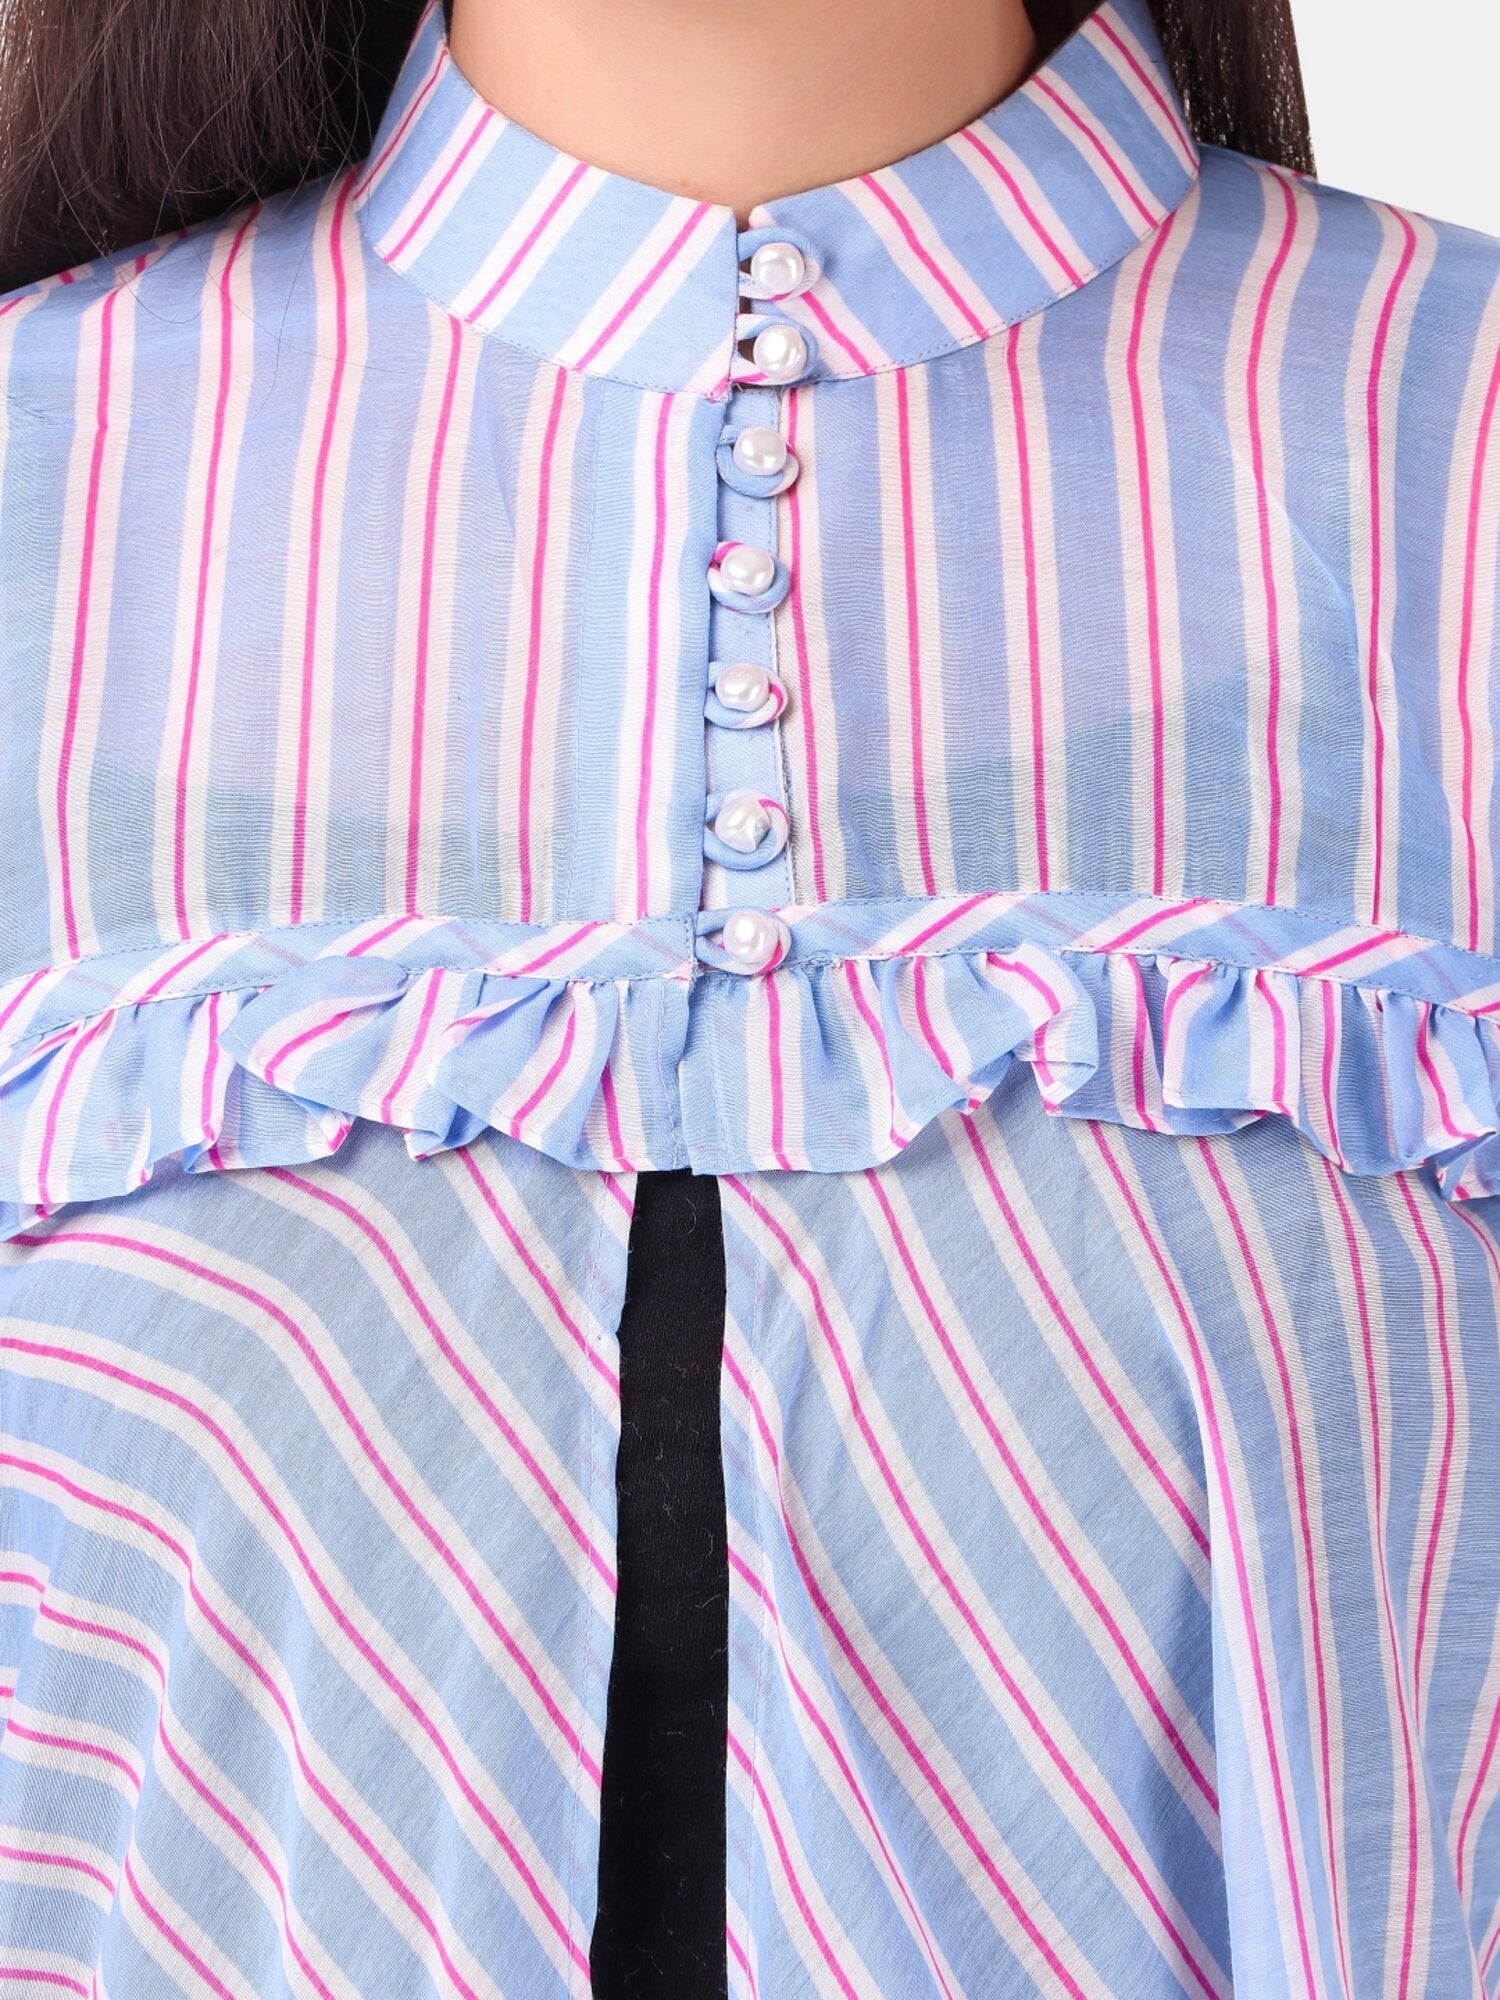 Women's Blue Stripe Soft Cotton High Neck Only Top - MESMORA FASHION